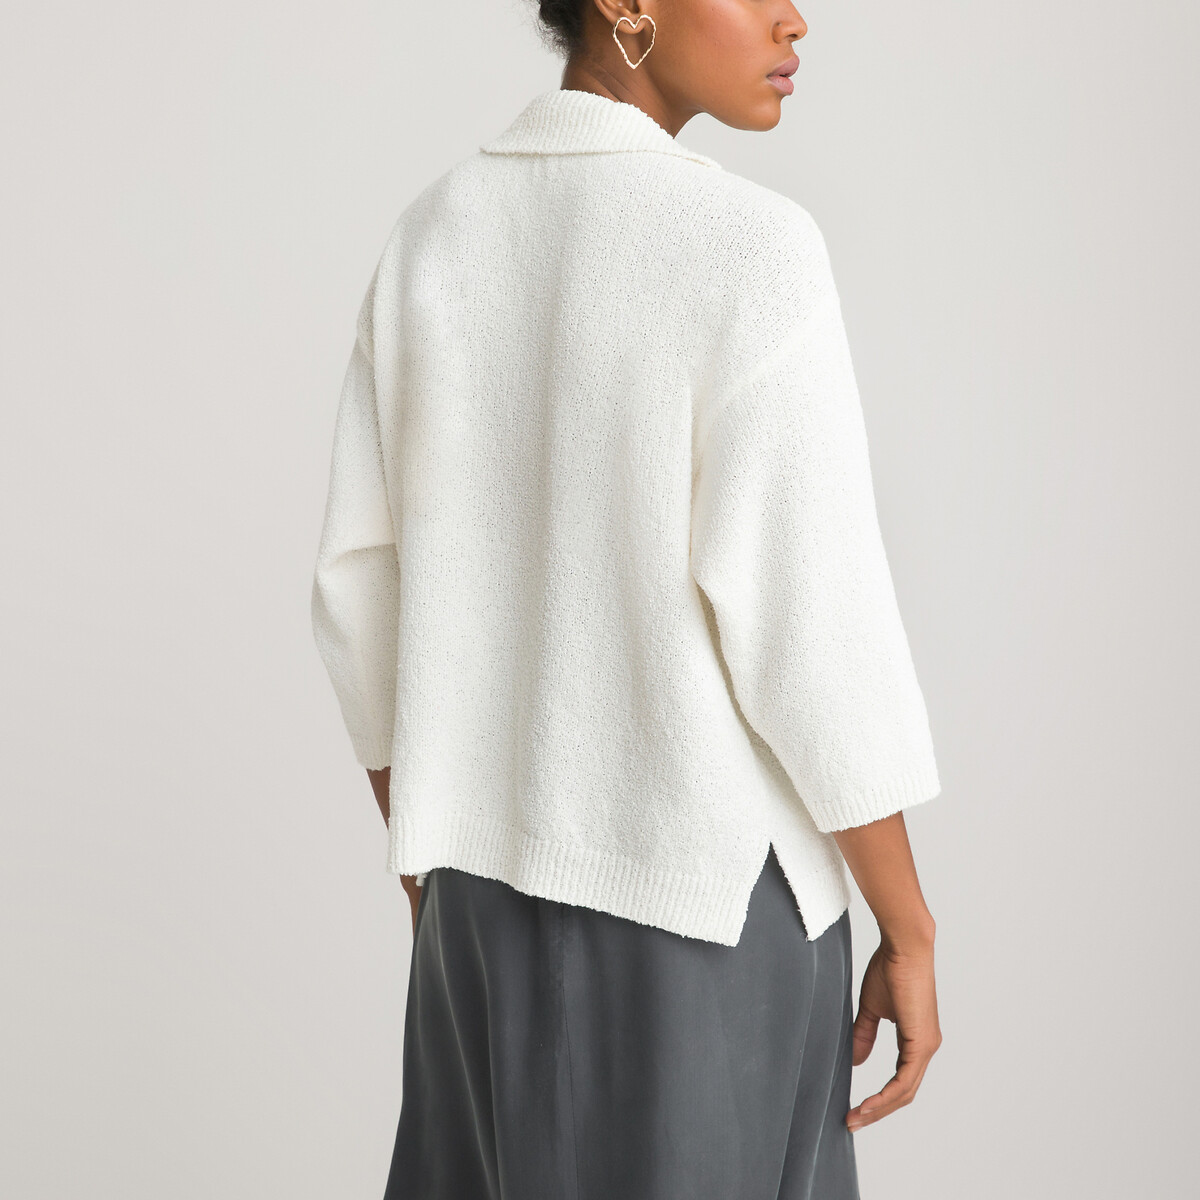 Пуловер LA REDOUTE COLLECTIONS С воротником-стойкой рукава 34 S белый, размер S - фото 4